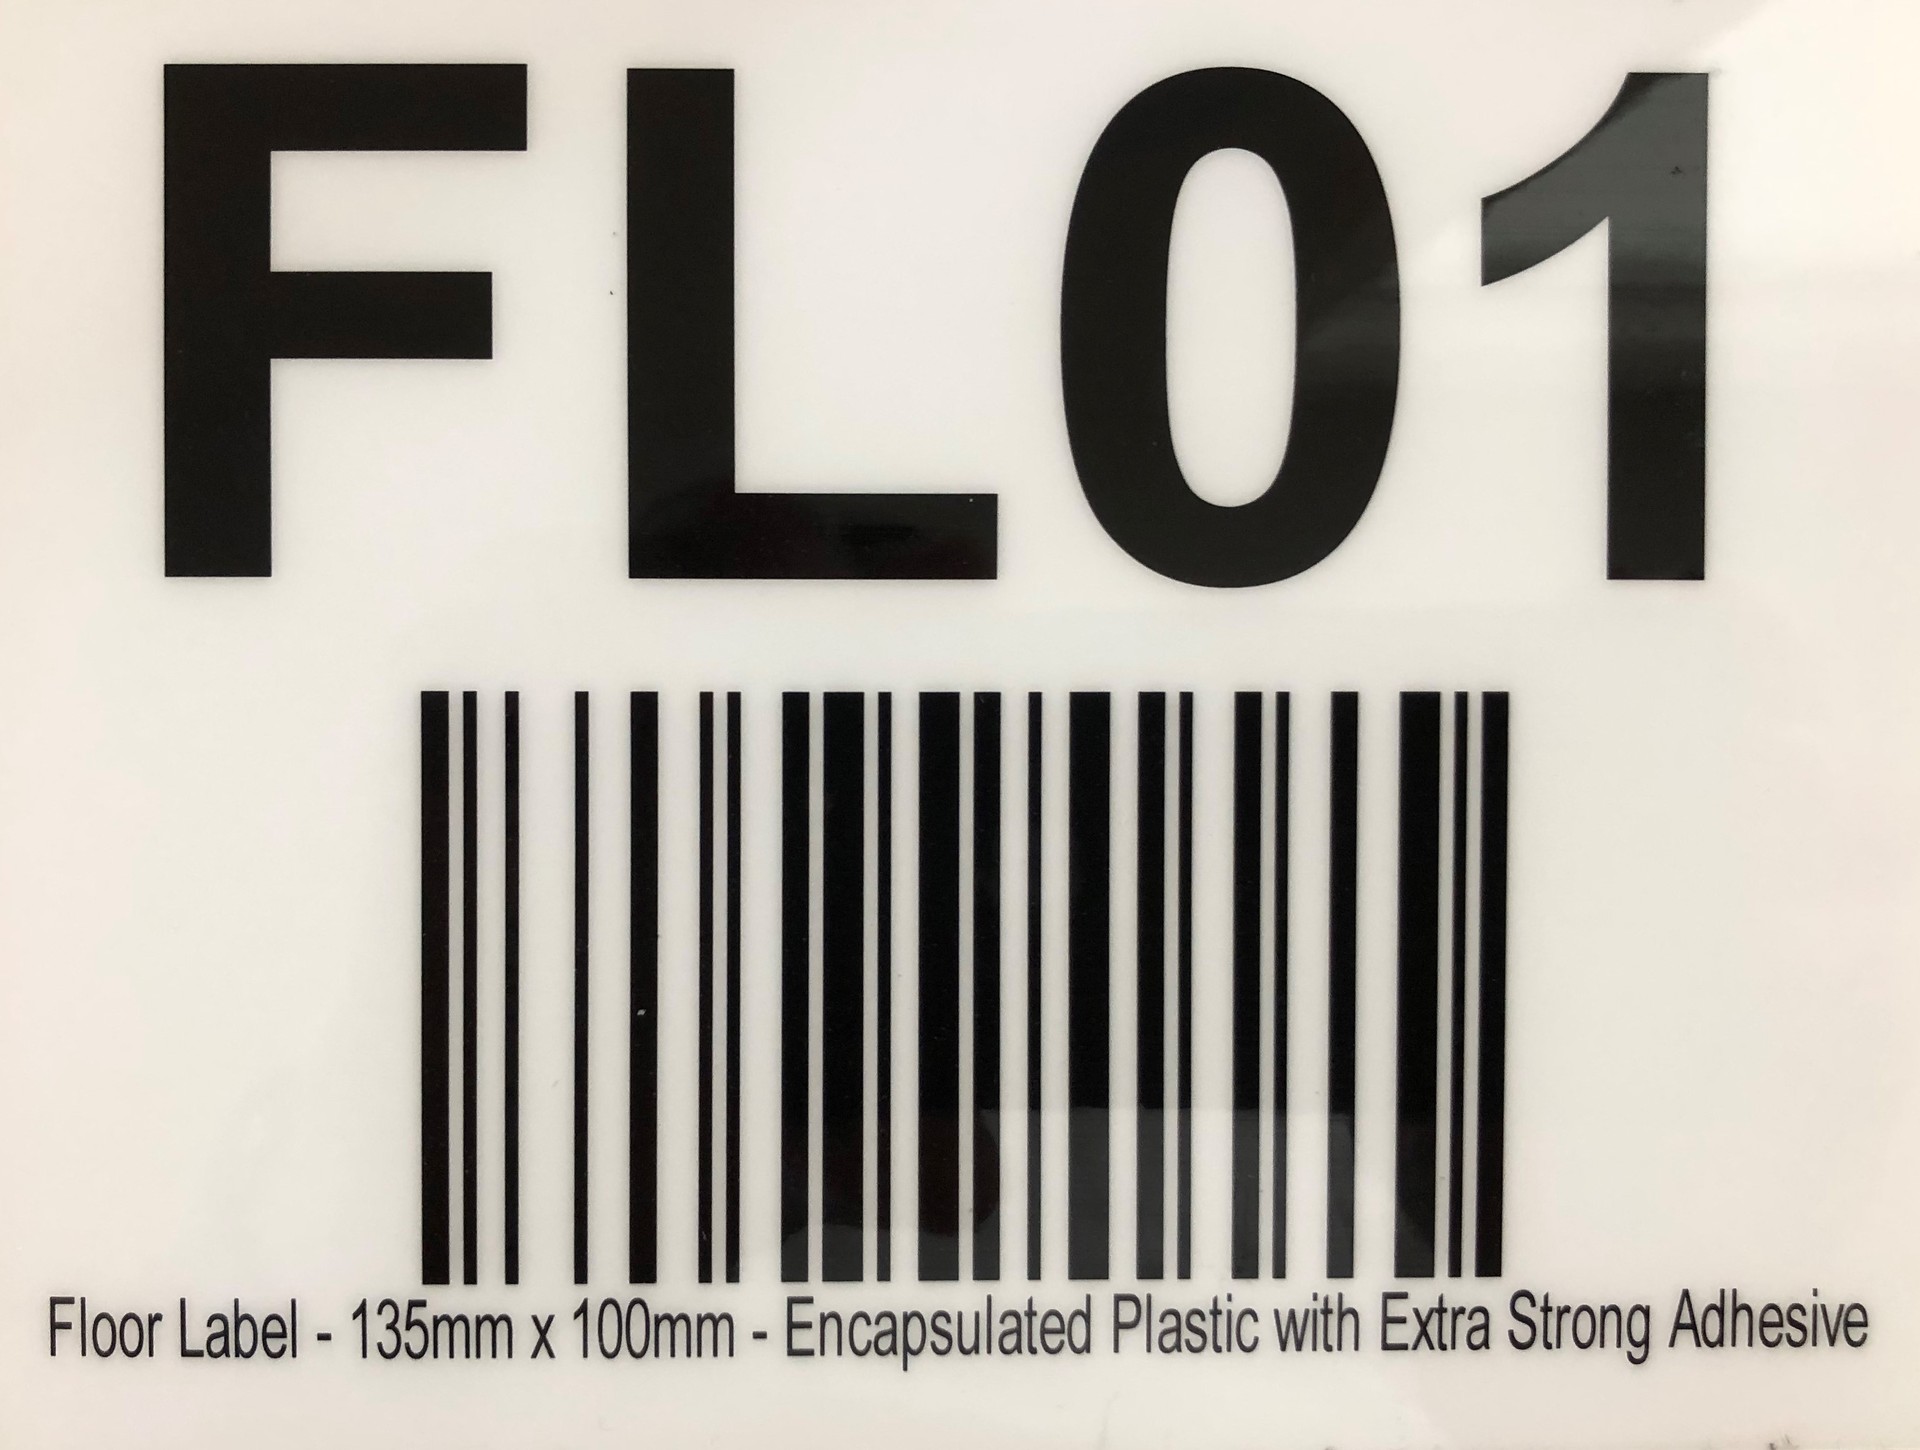 Floor location label.